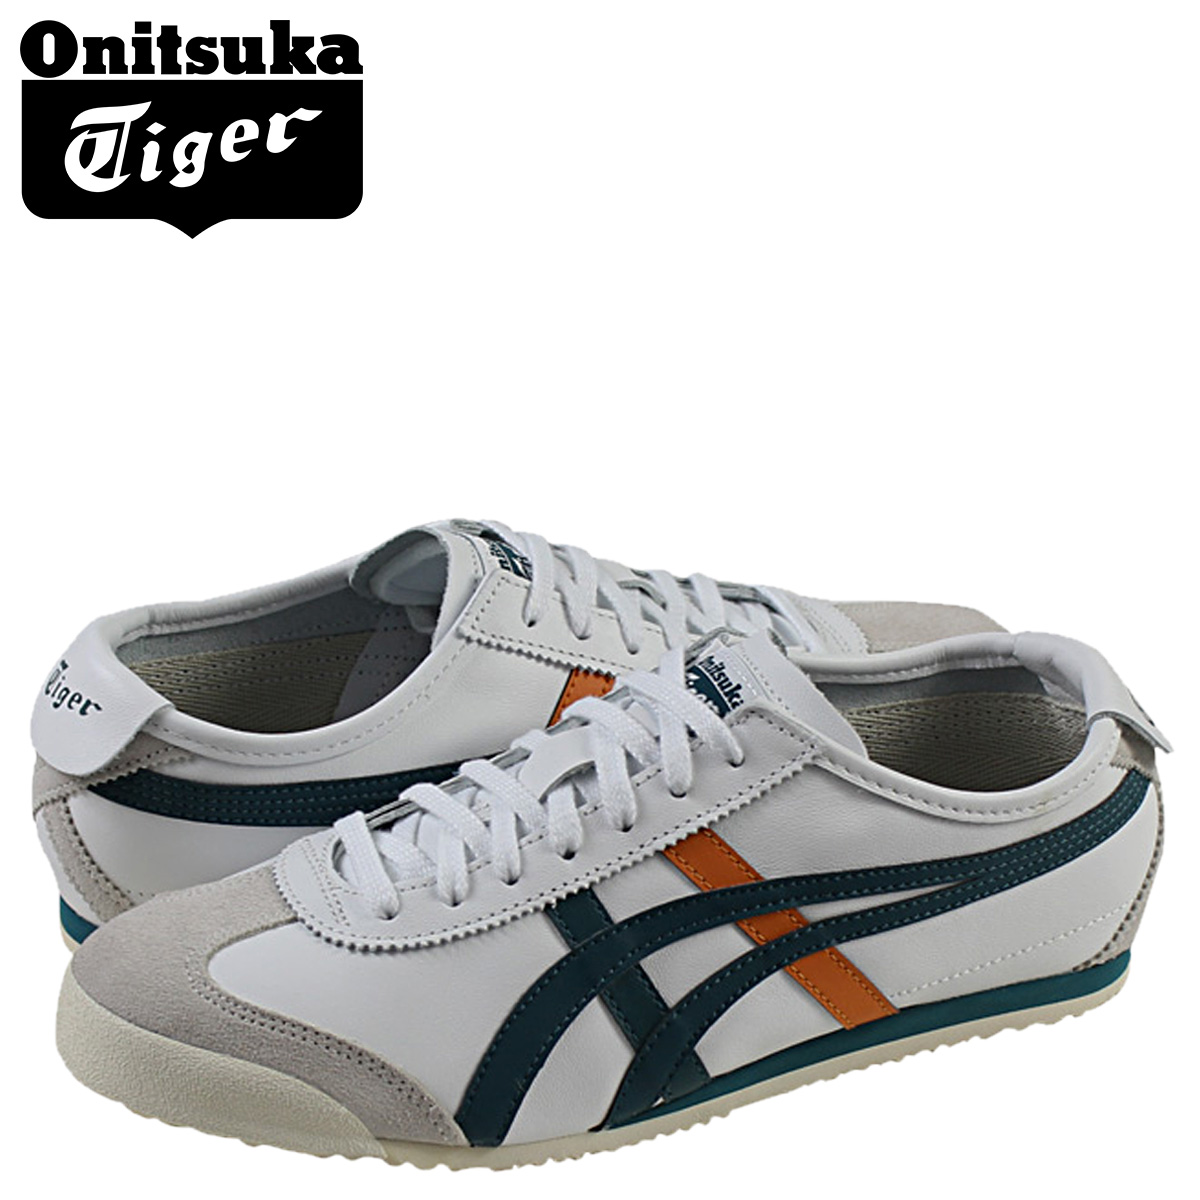 onitsuka tiger shoes design